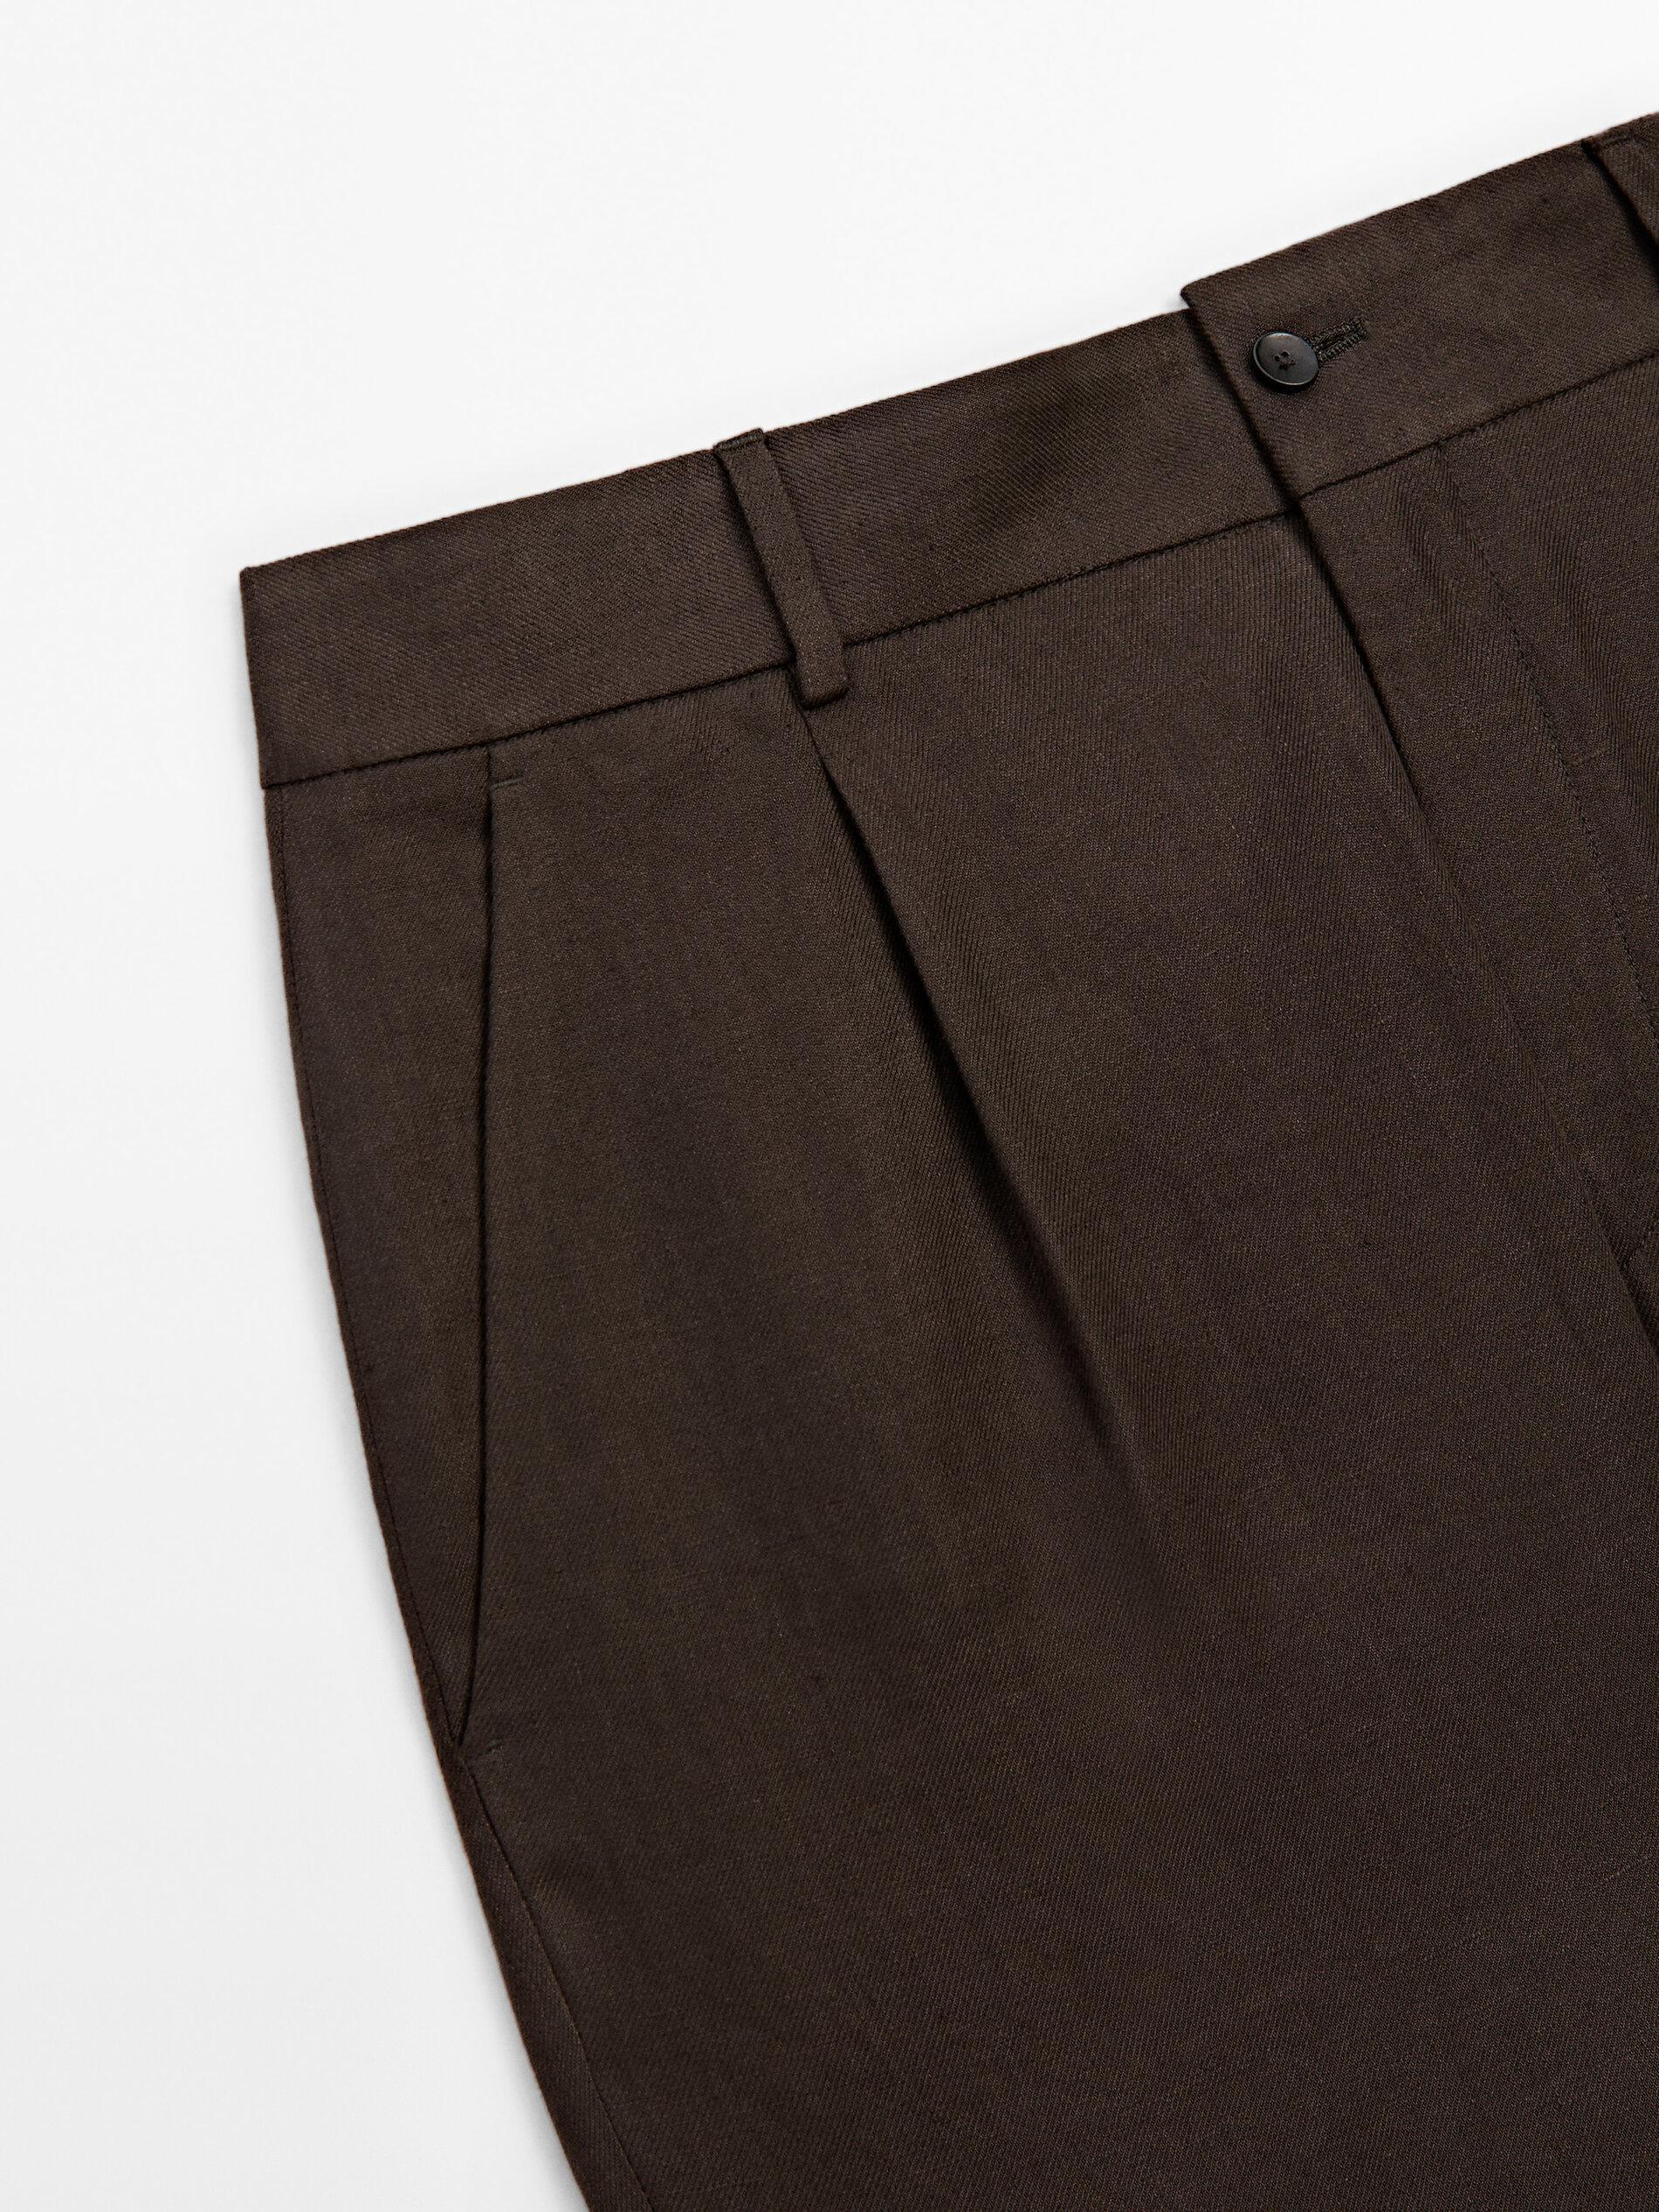 MASSIMO DUTTI Darted Jacquard Linen Trousers - Studio in Natural | Lyst